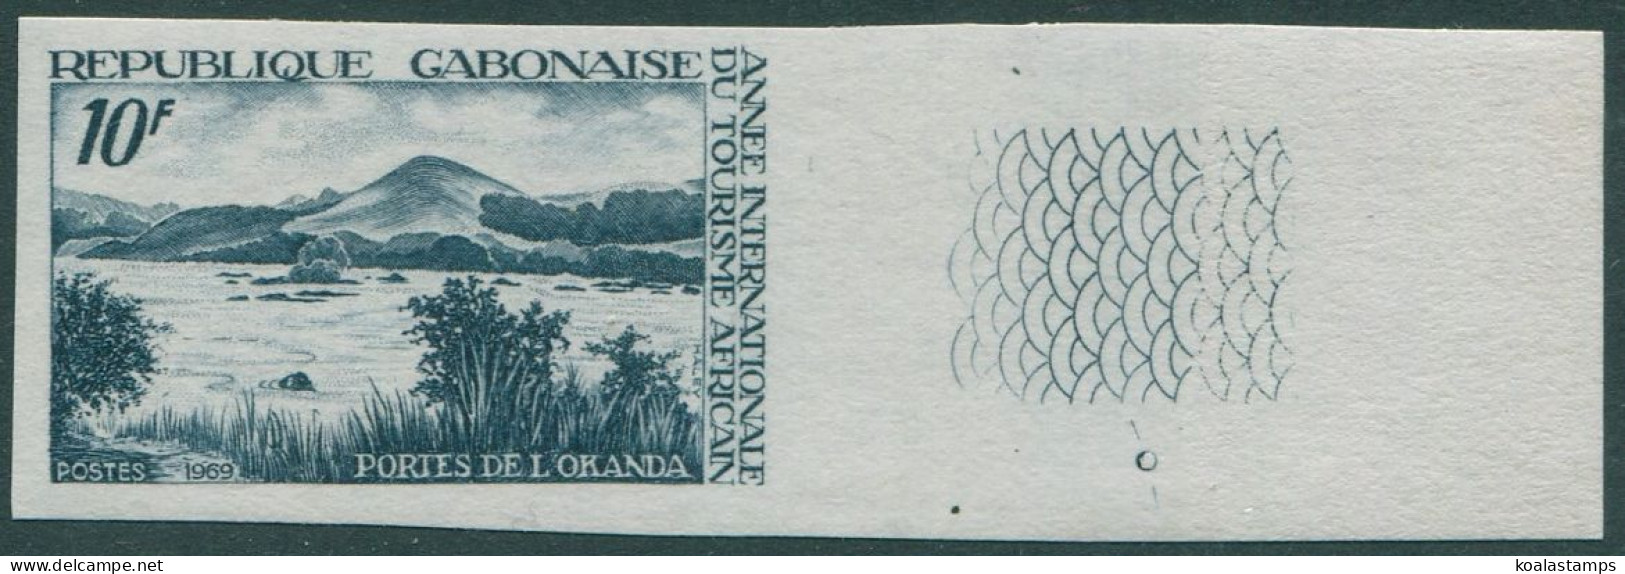 Gabon 1969 SG347 10f Portes De L'Akonda Imperf MNH - Gabun (1960-...)